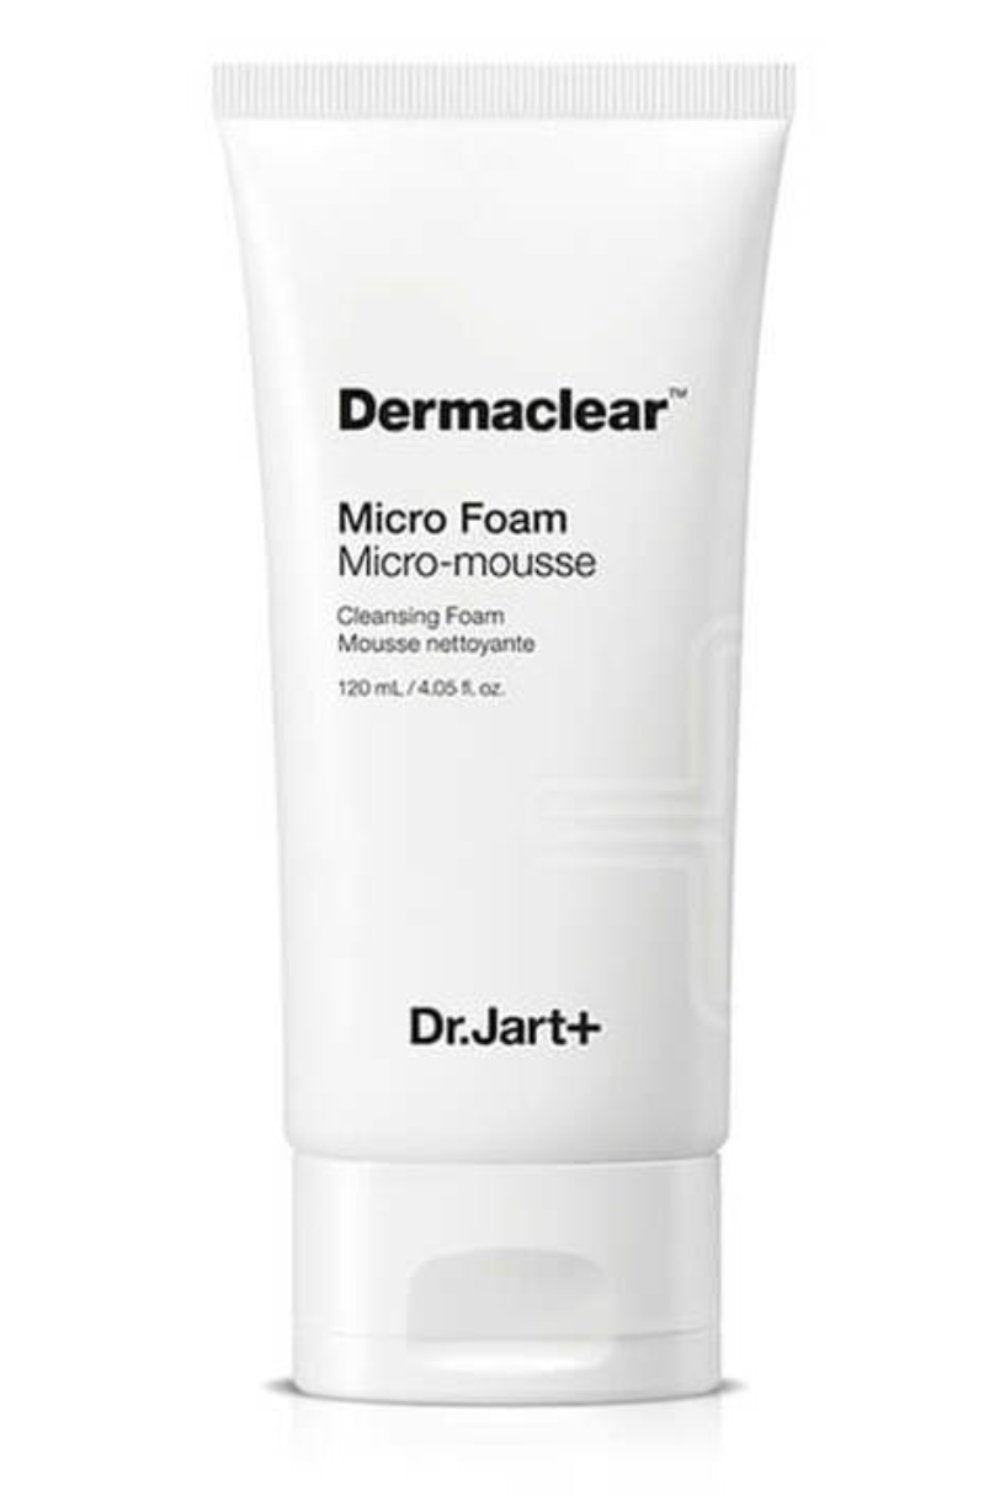 Dr. Jart+ Dermaclear Micro Foam 120ml - The Face Method